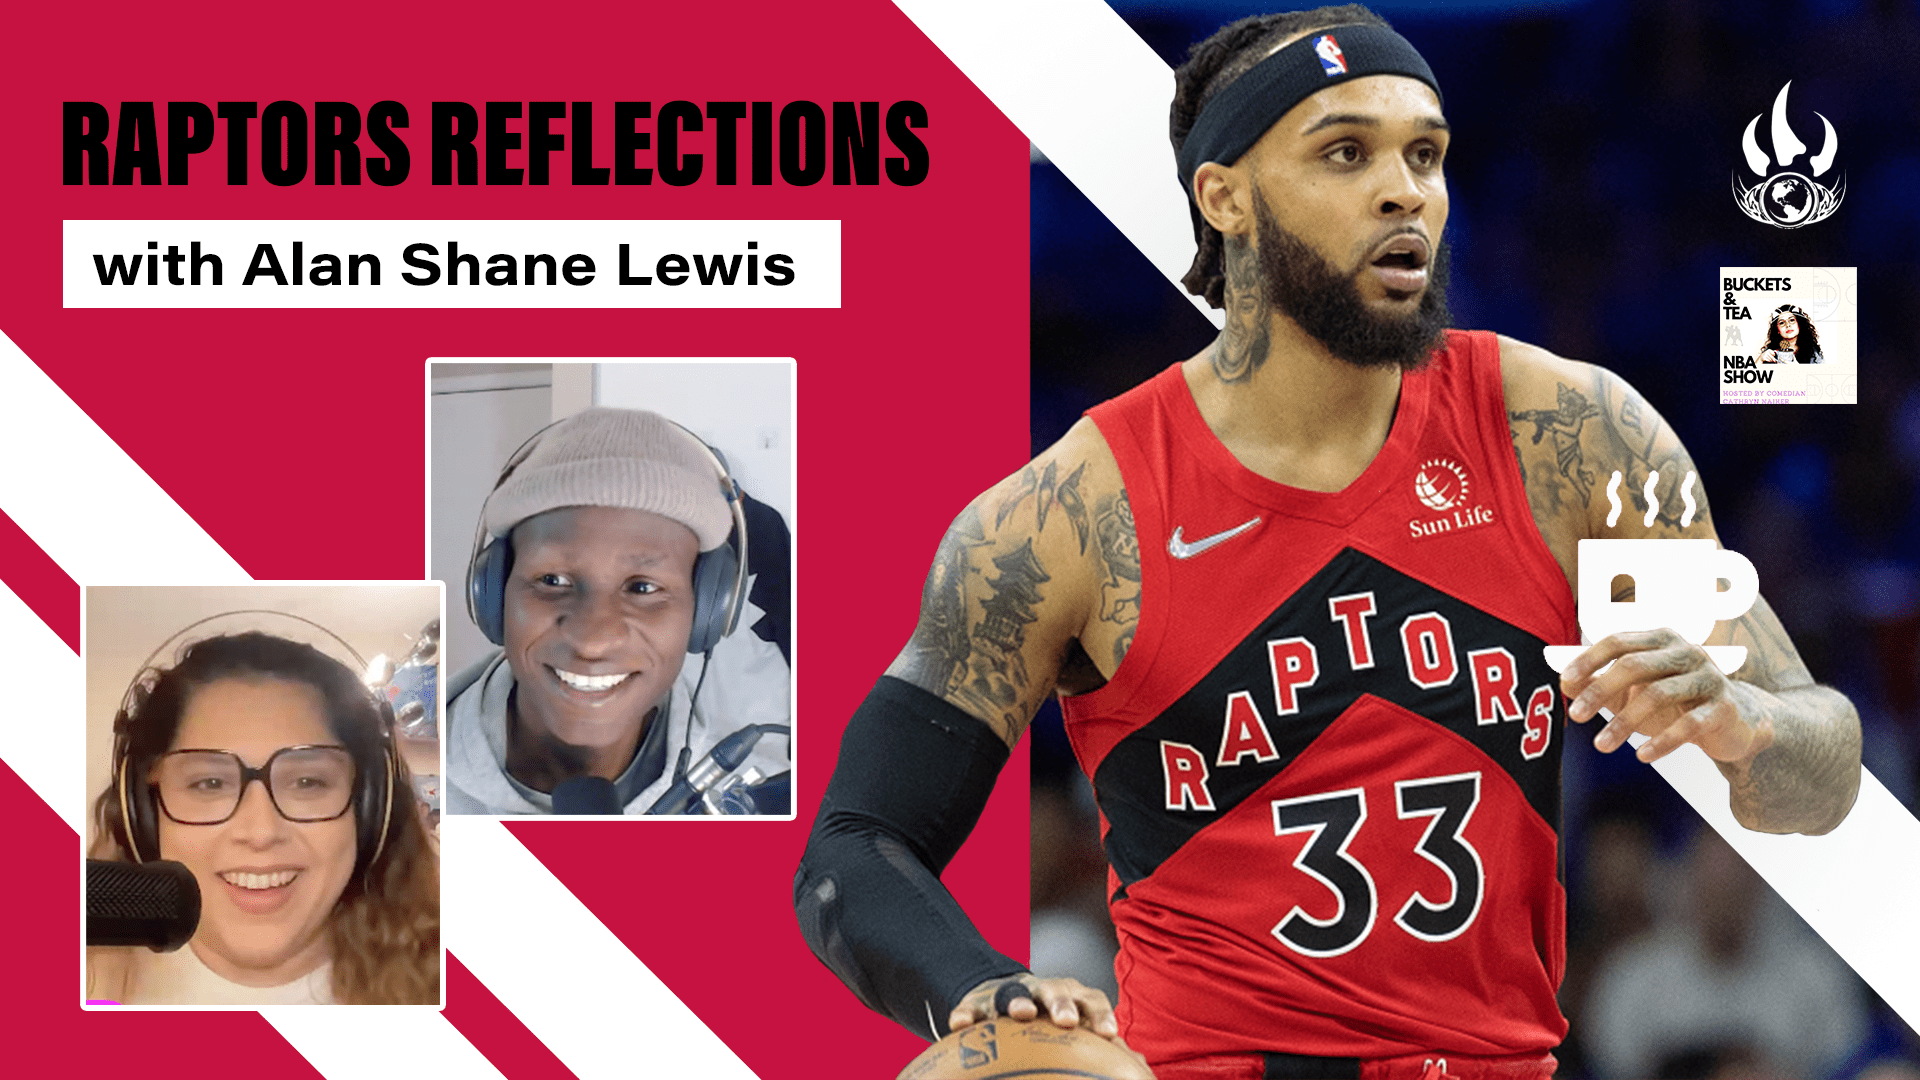 Raptors Reflections with Alan Shane Lewis – Buckets & Tea NBA Show